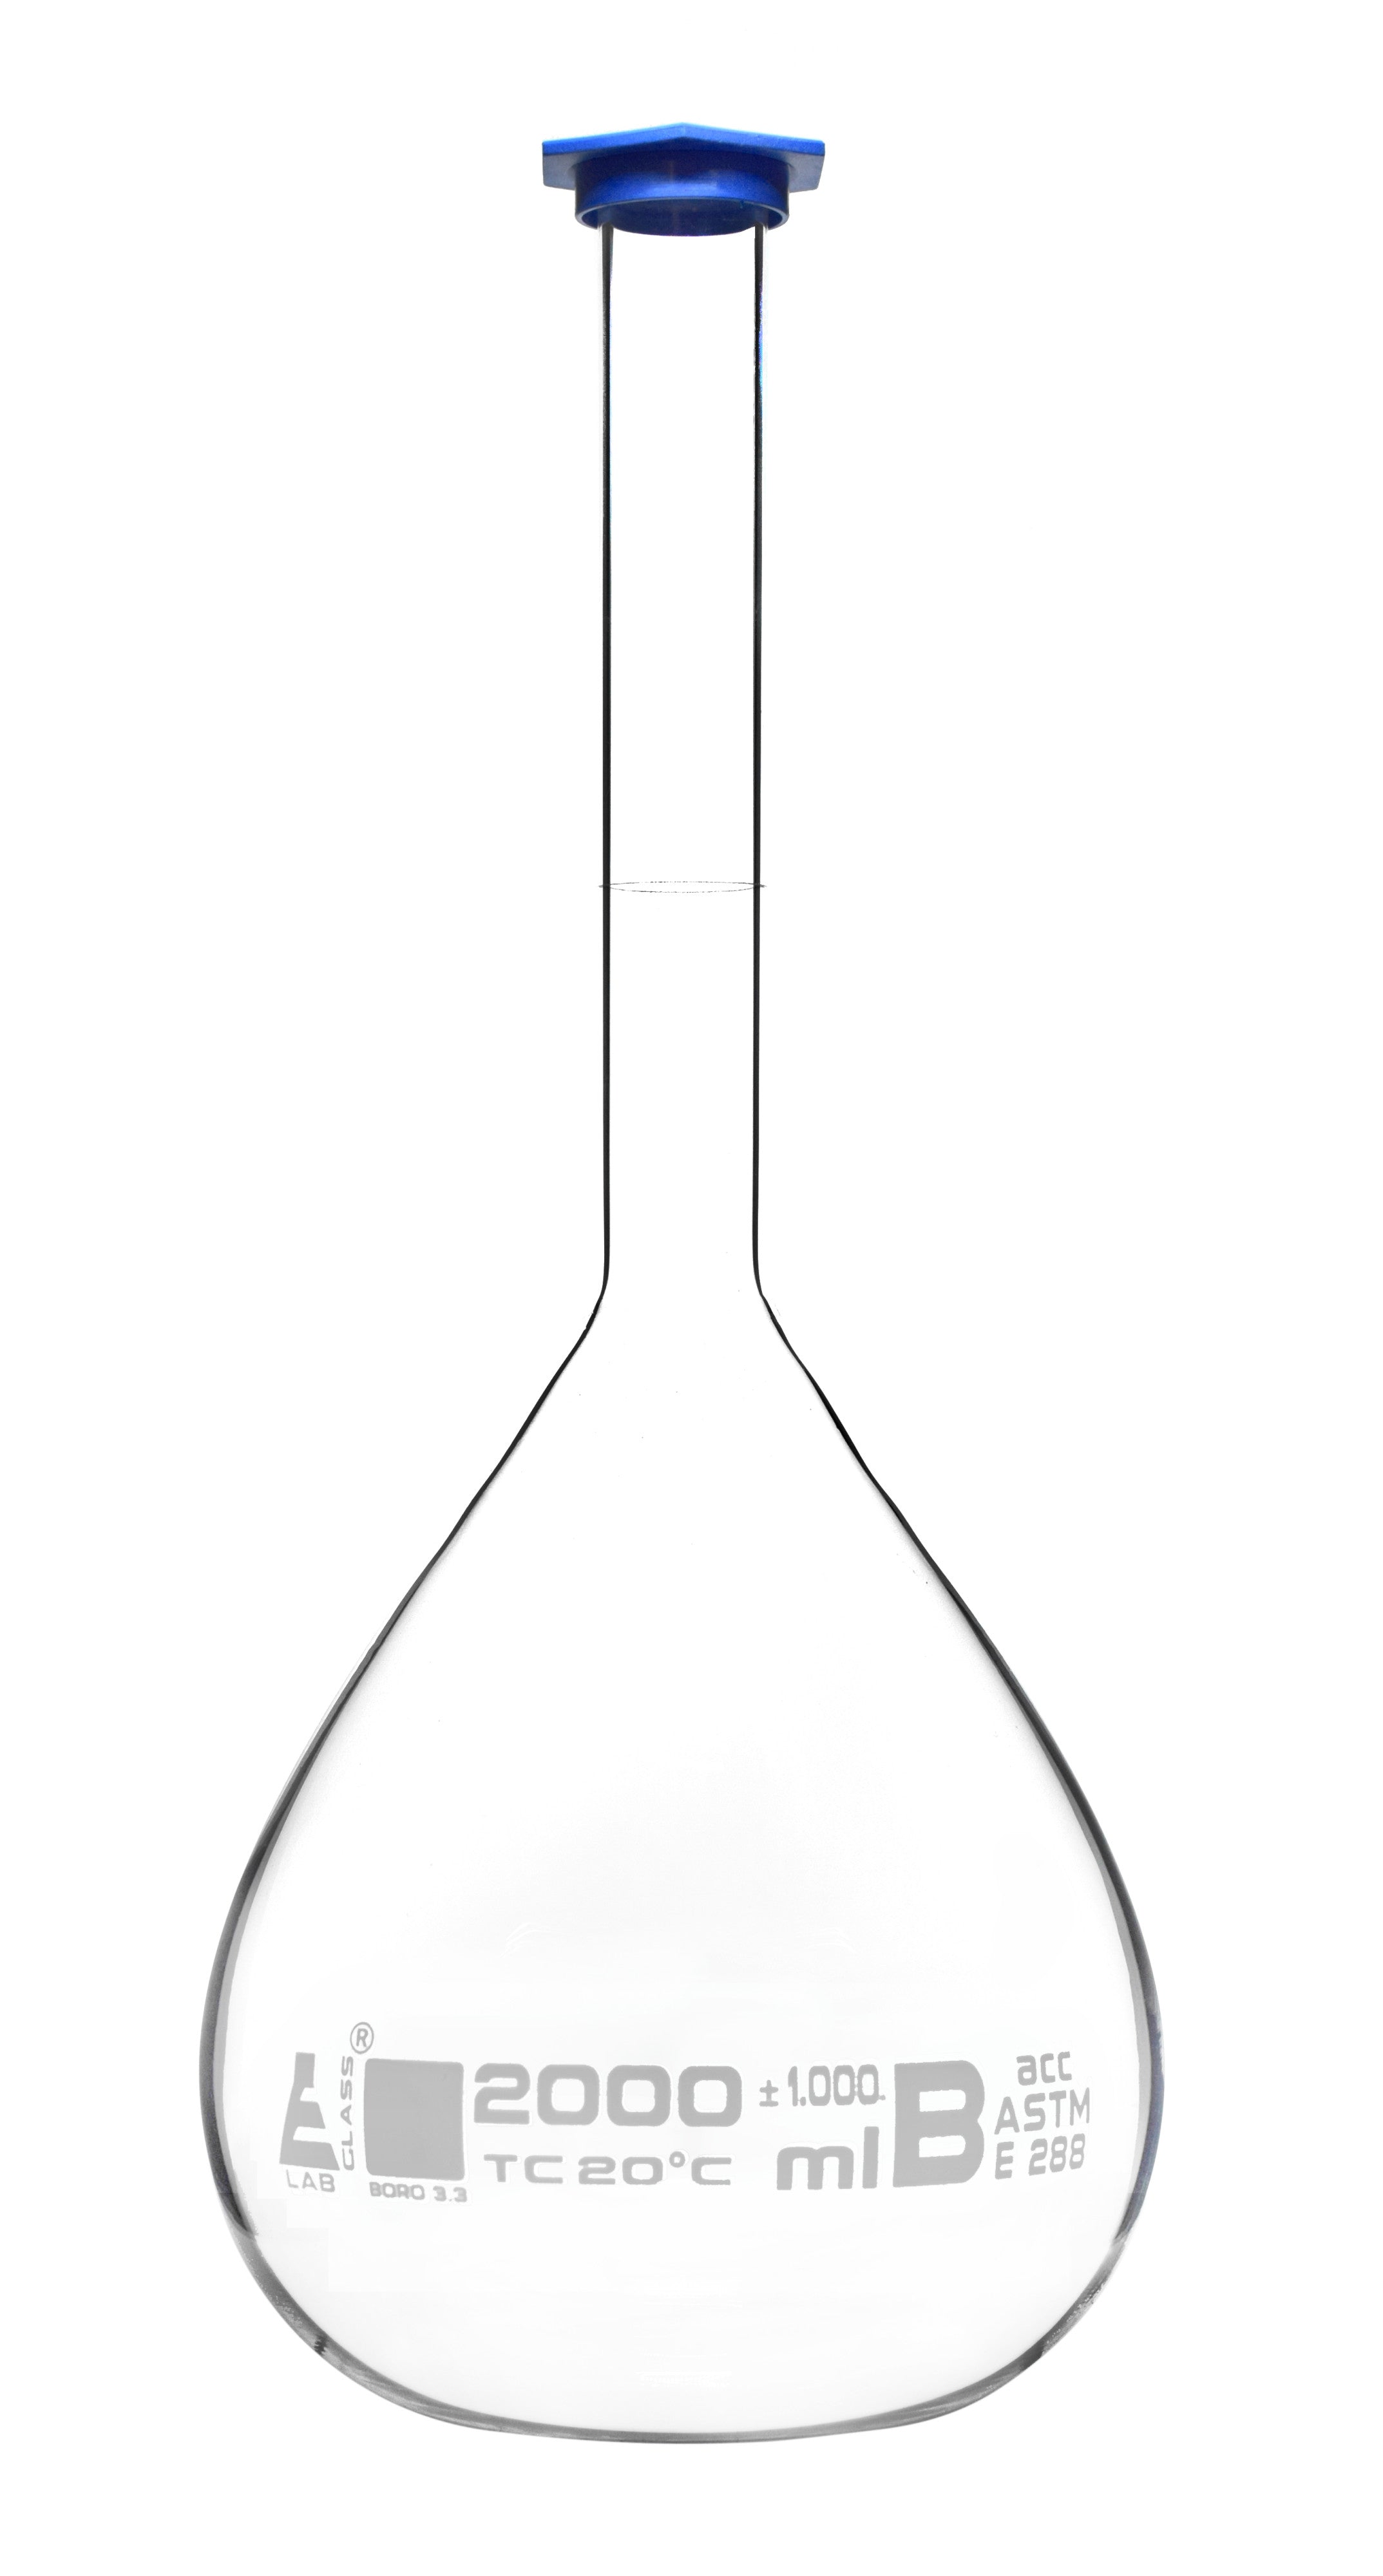 Borosilicate Volumetric Flask with Polyethylene Snap Cap, 2000 ml, Class B, White Print, ASTM, Autoclavable